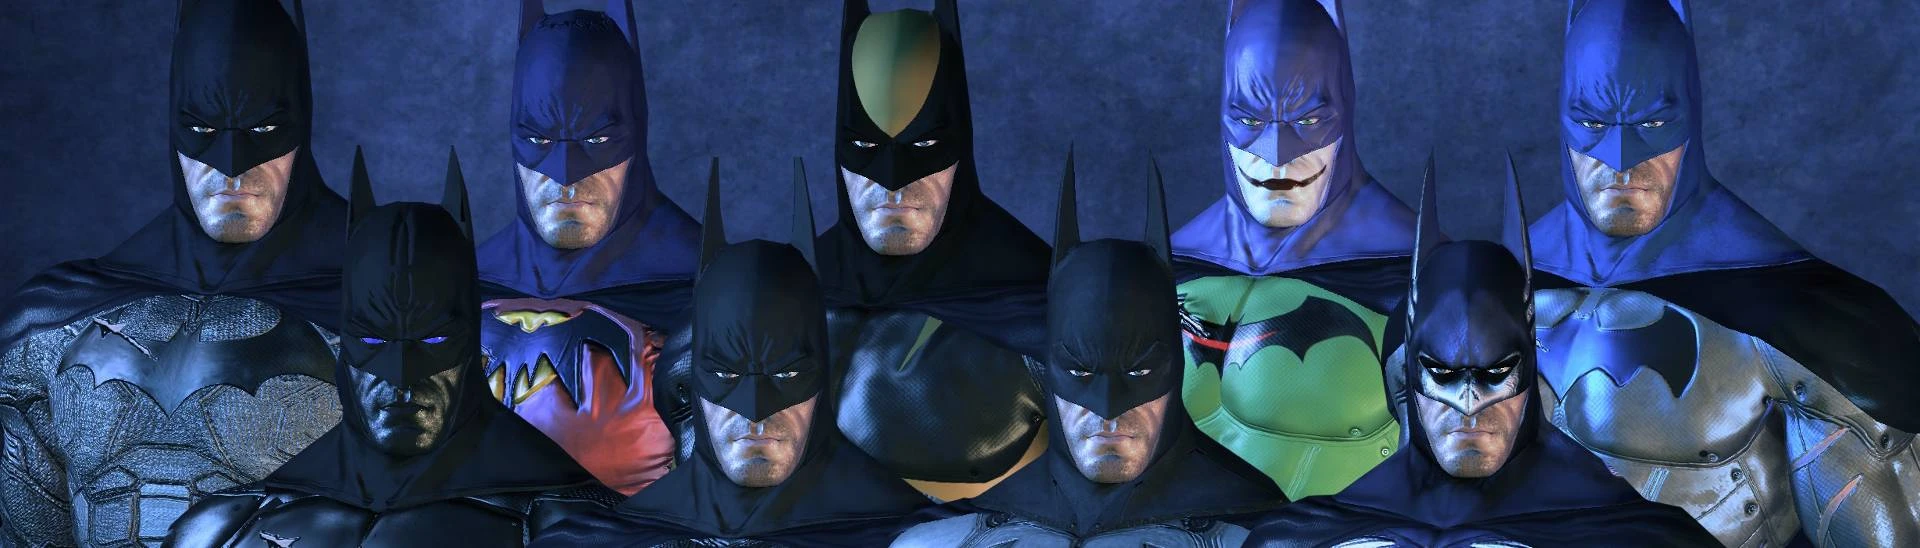 Batman Arkham City: Arkham City Skins Pack on Steam